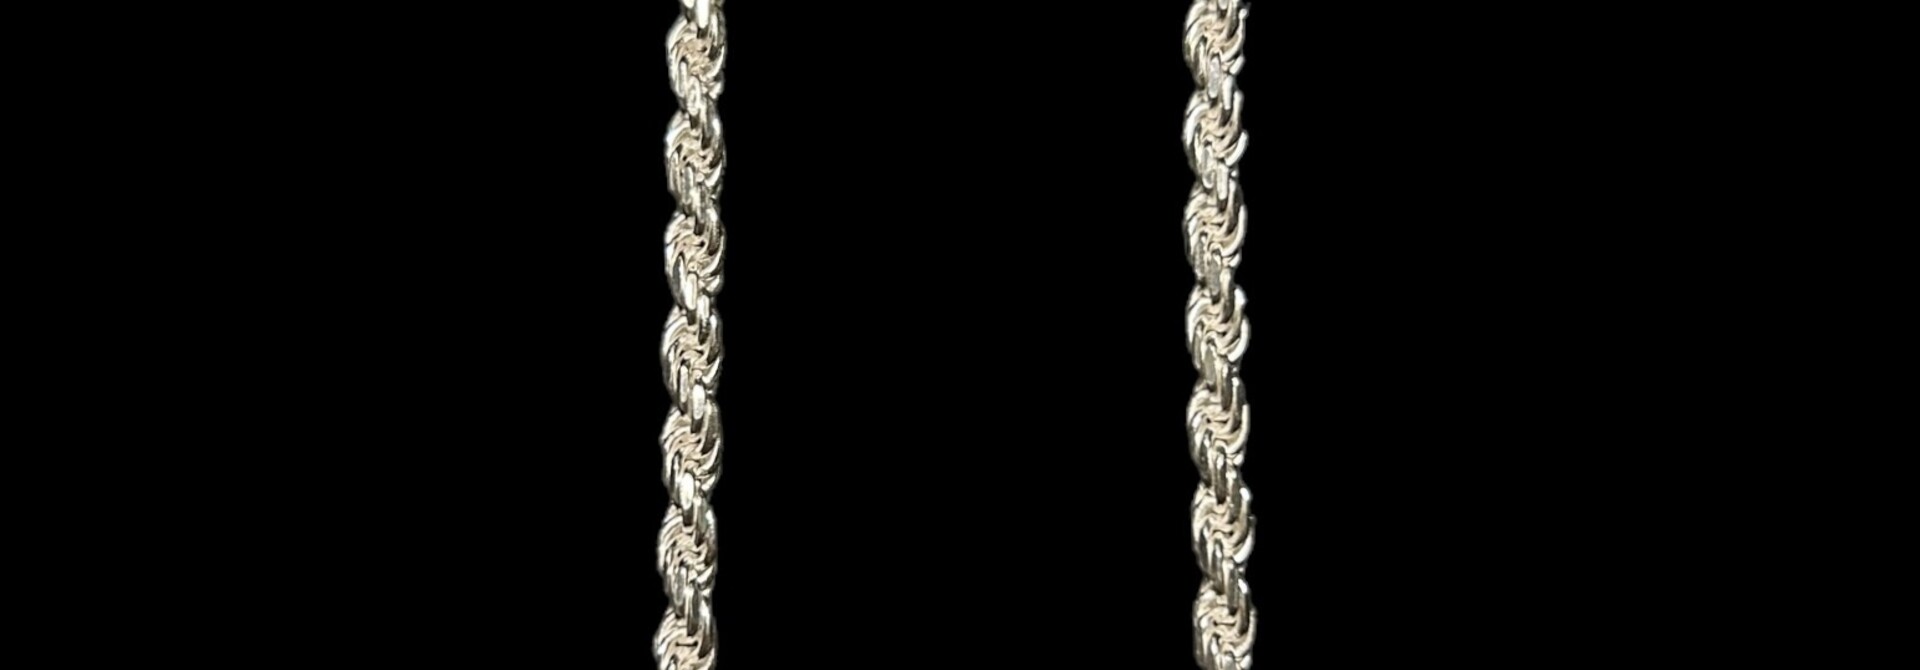 Rope chain massief zilver diamond cut